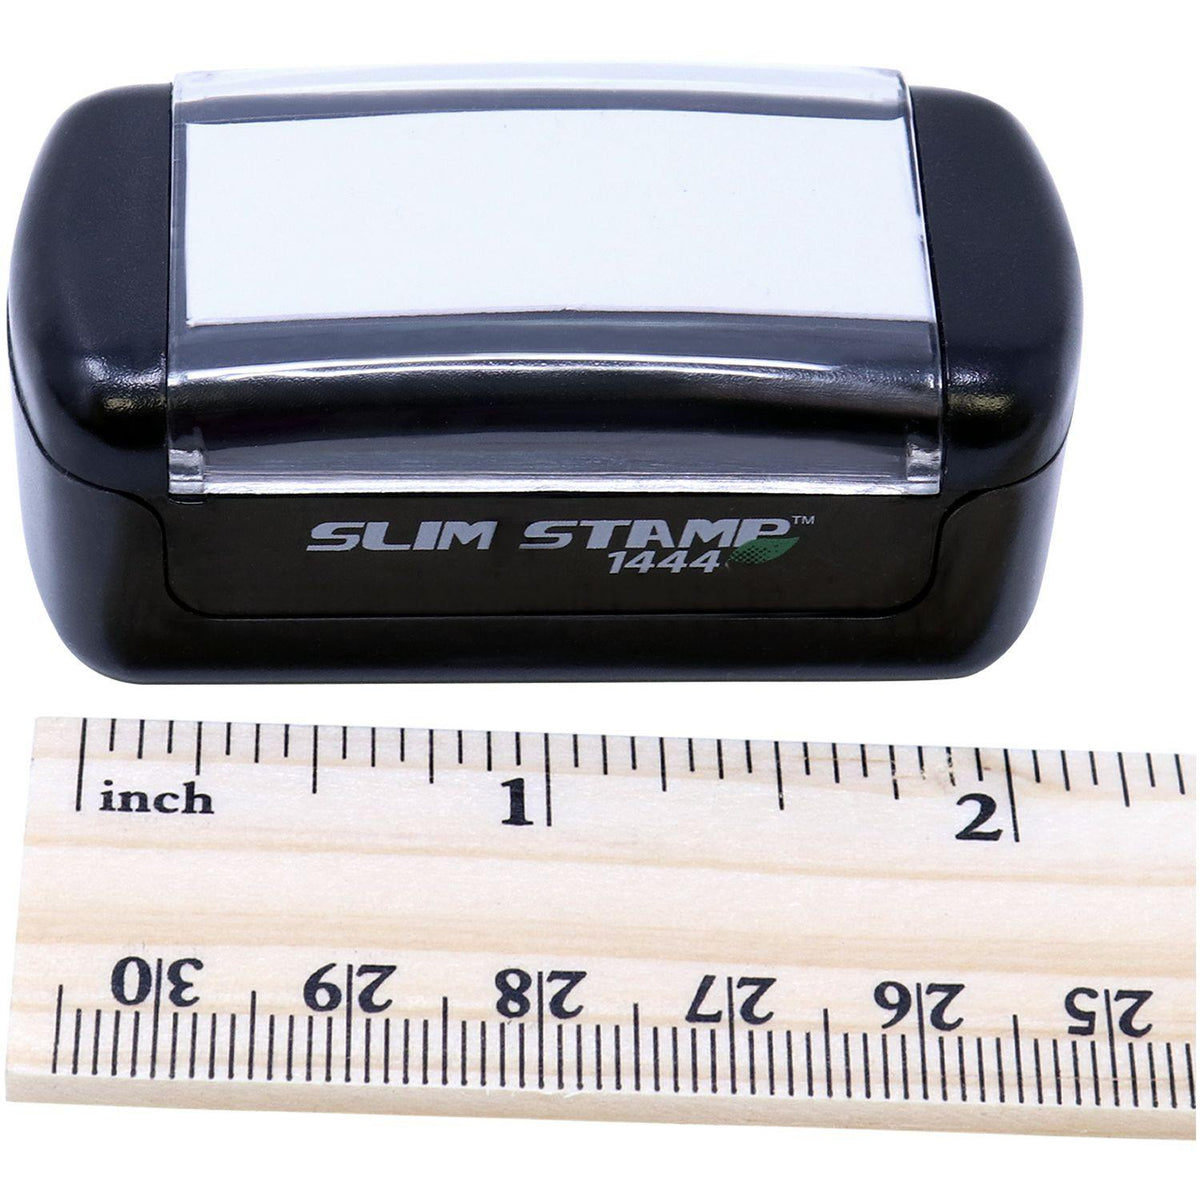 Measurement Slim Pre-Inked Unclaimed Stamp with Ruler